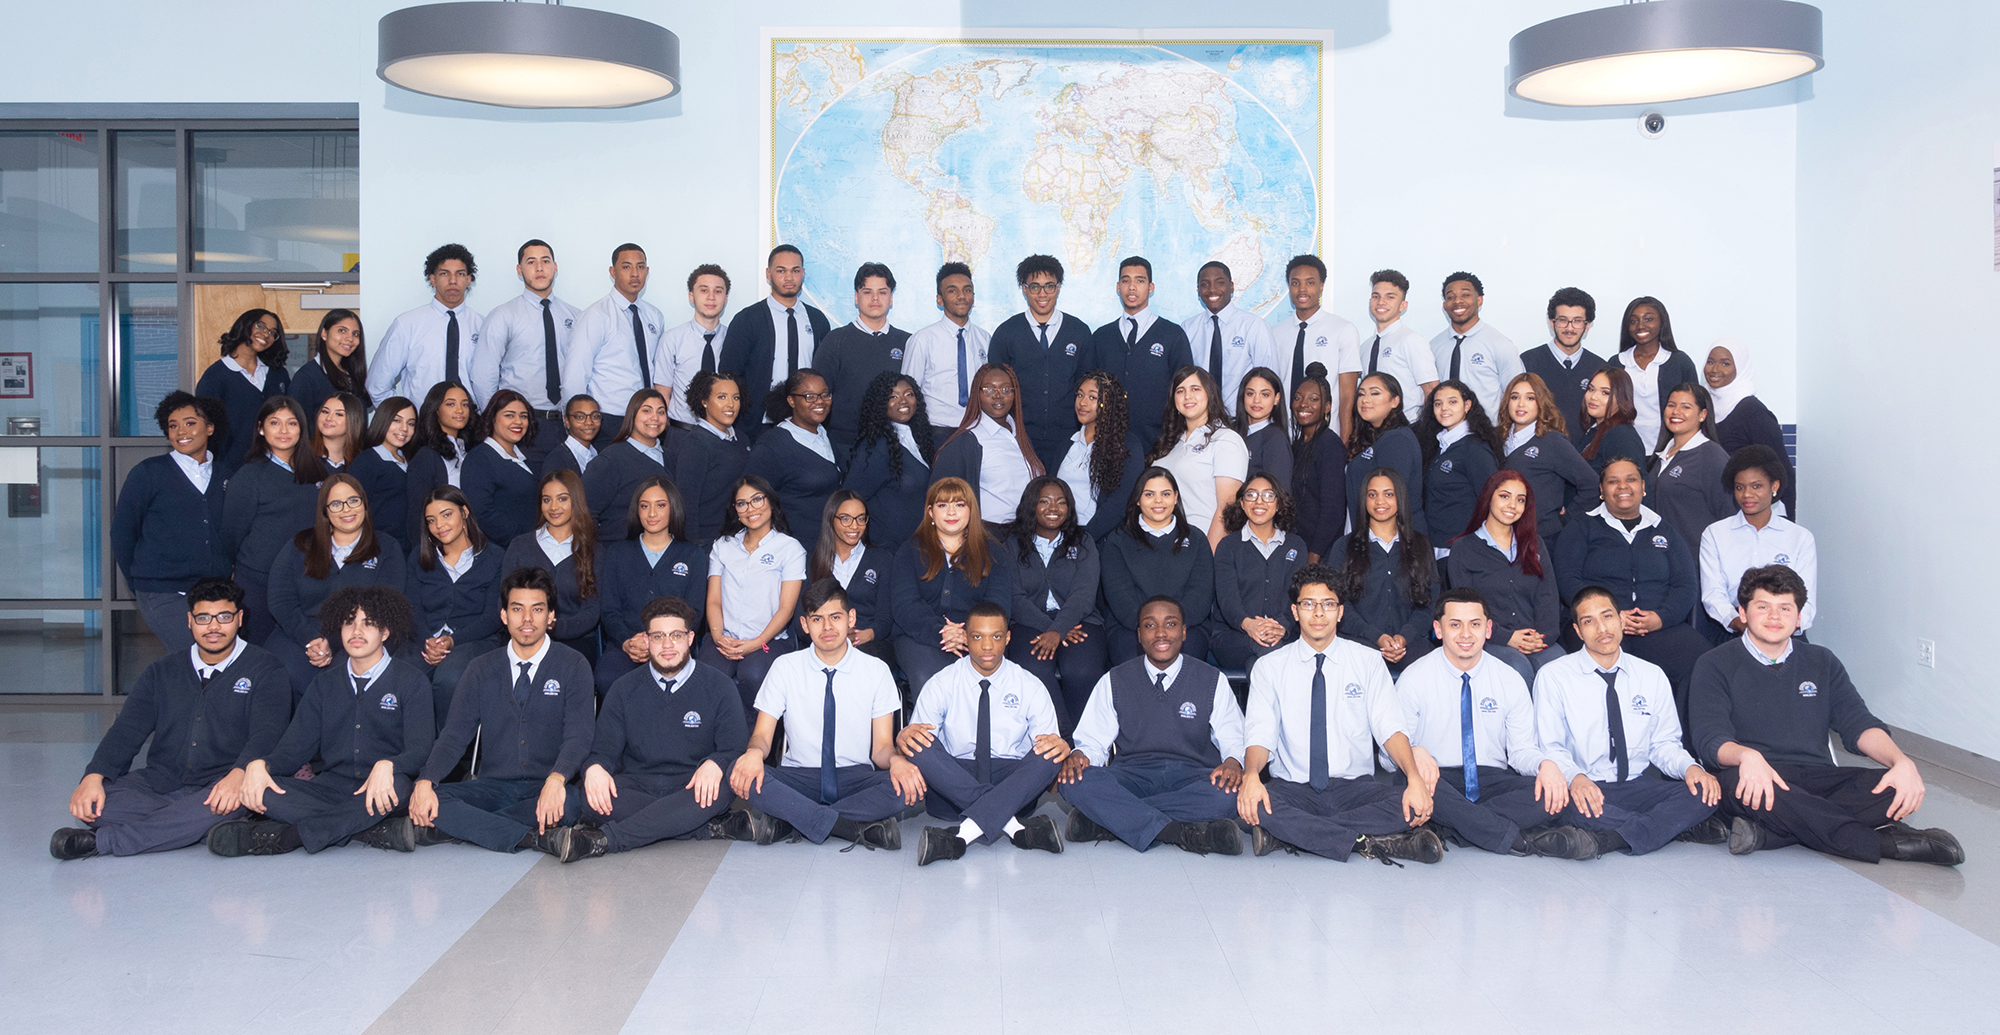 Photo International Leadership Charter High School